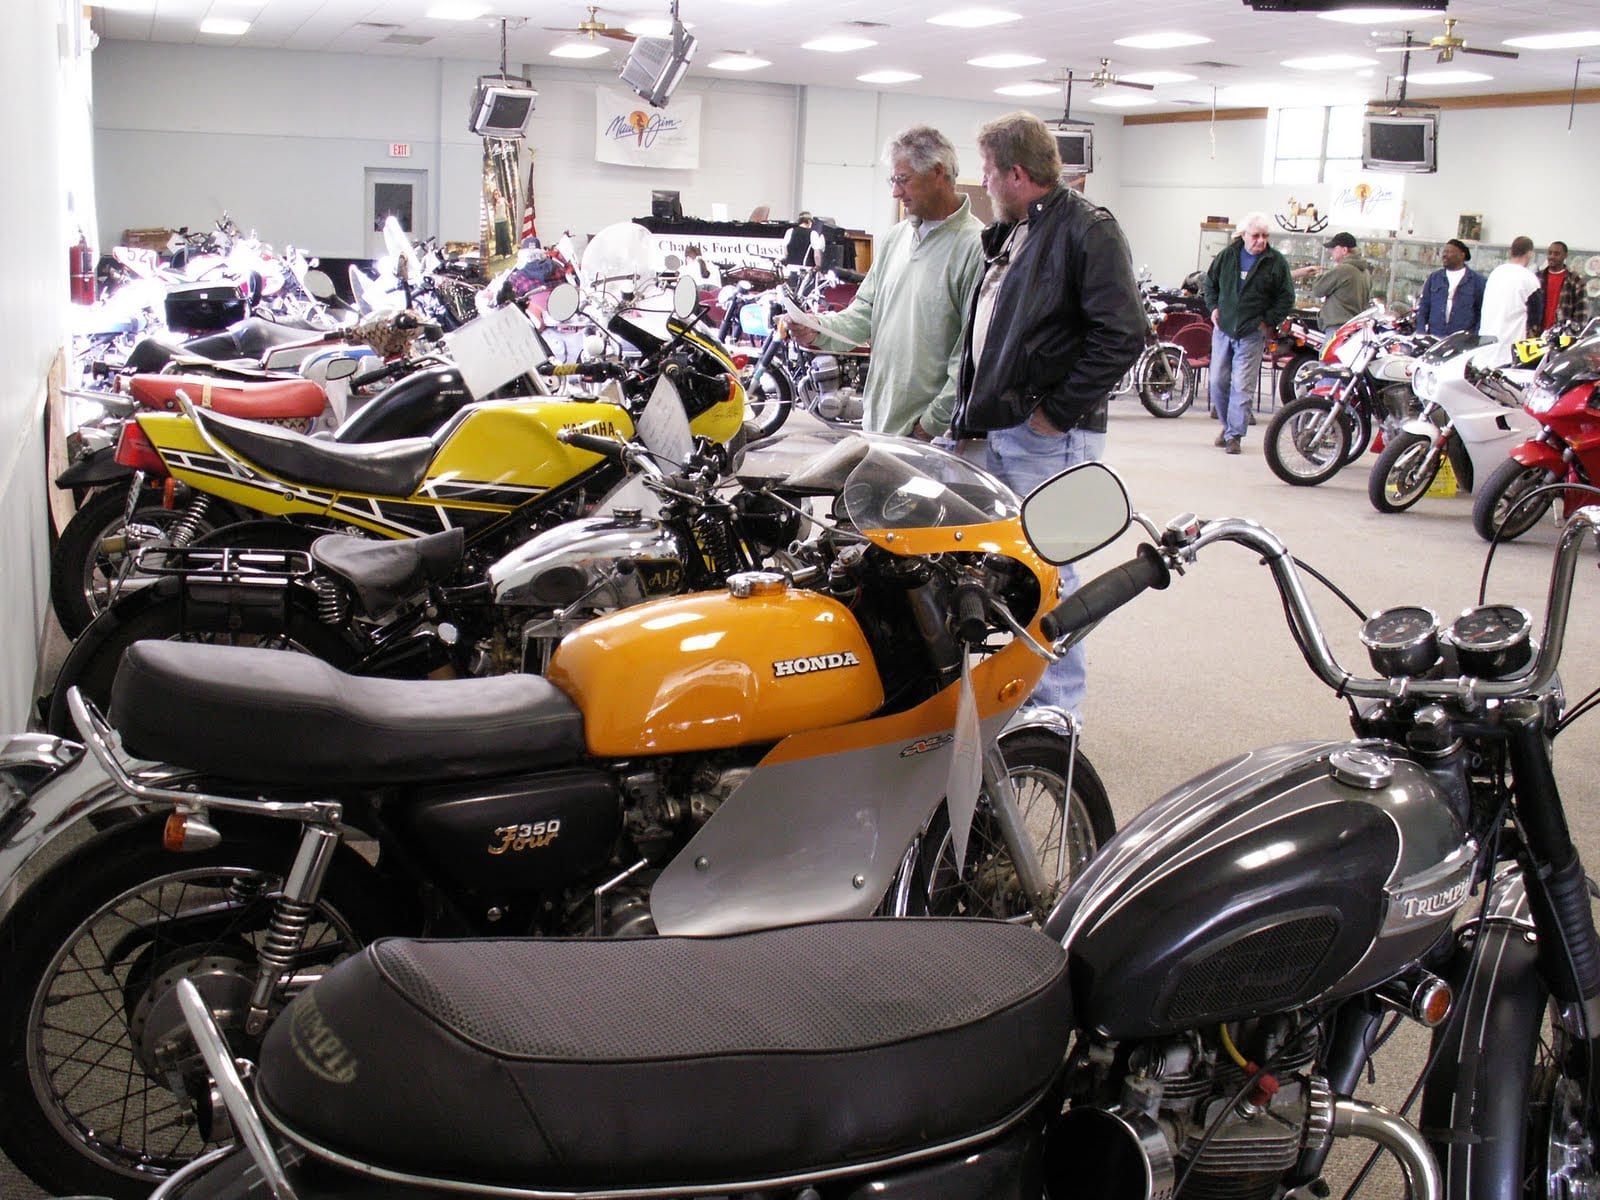 Mecum Vintage Motorcycle Auction in Las Vegas